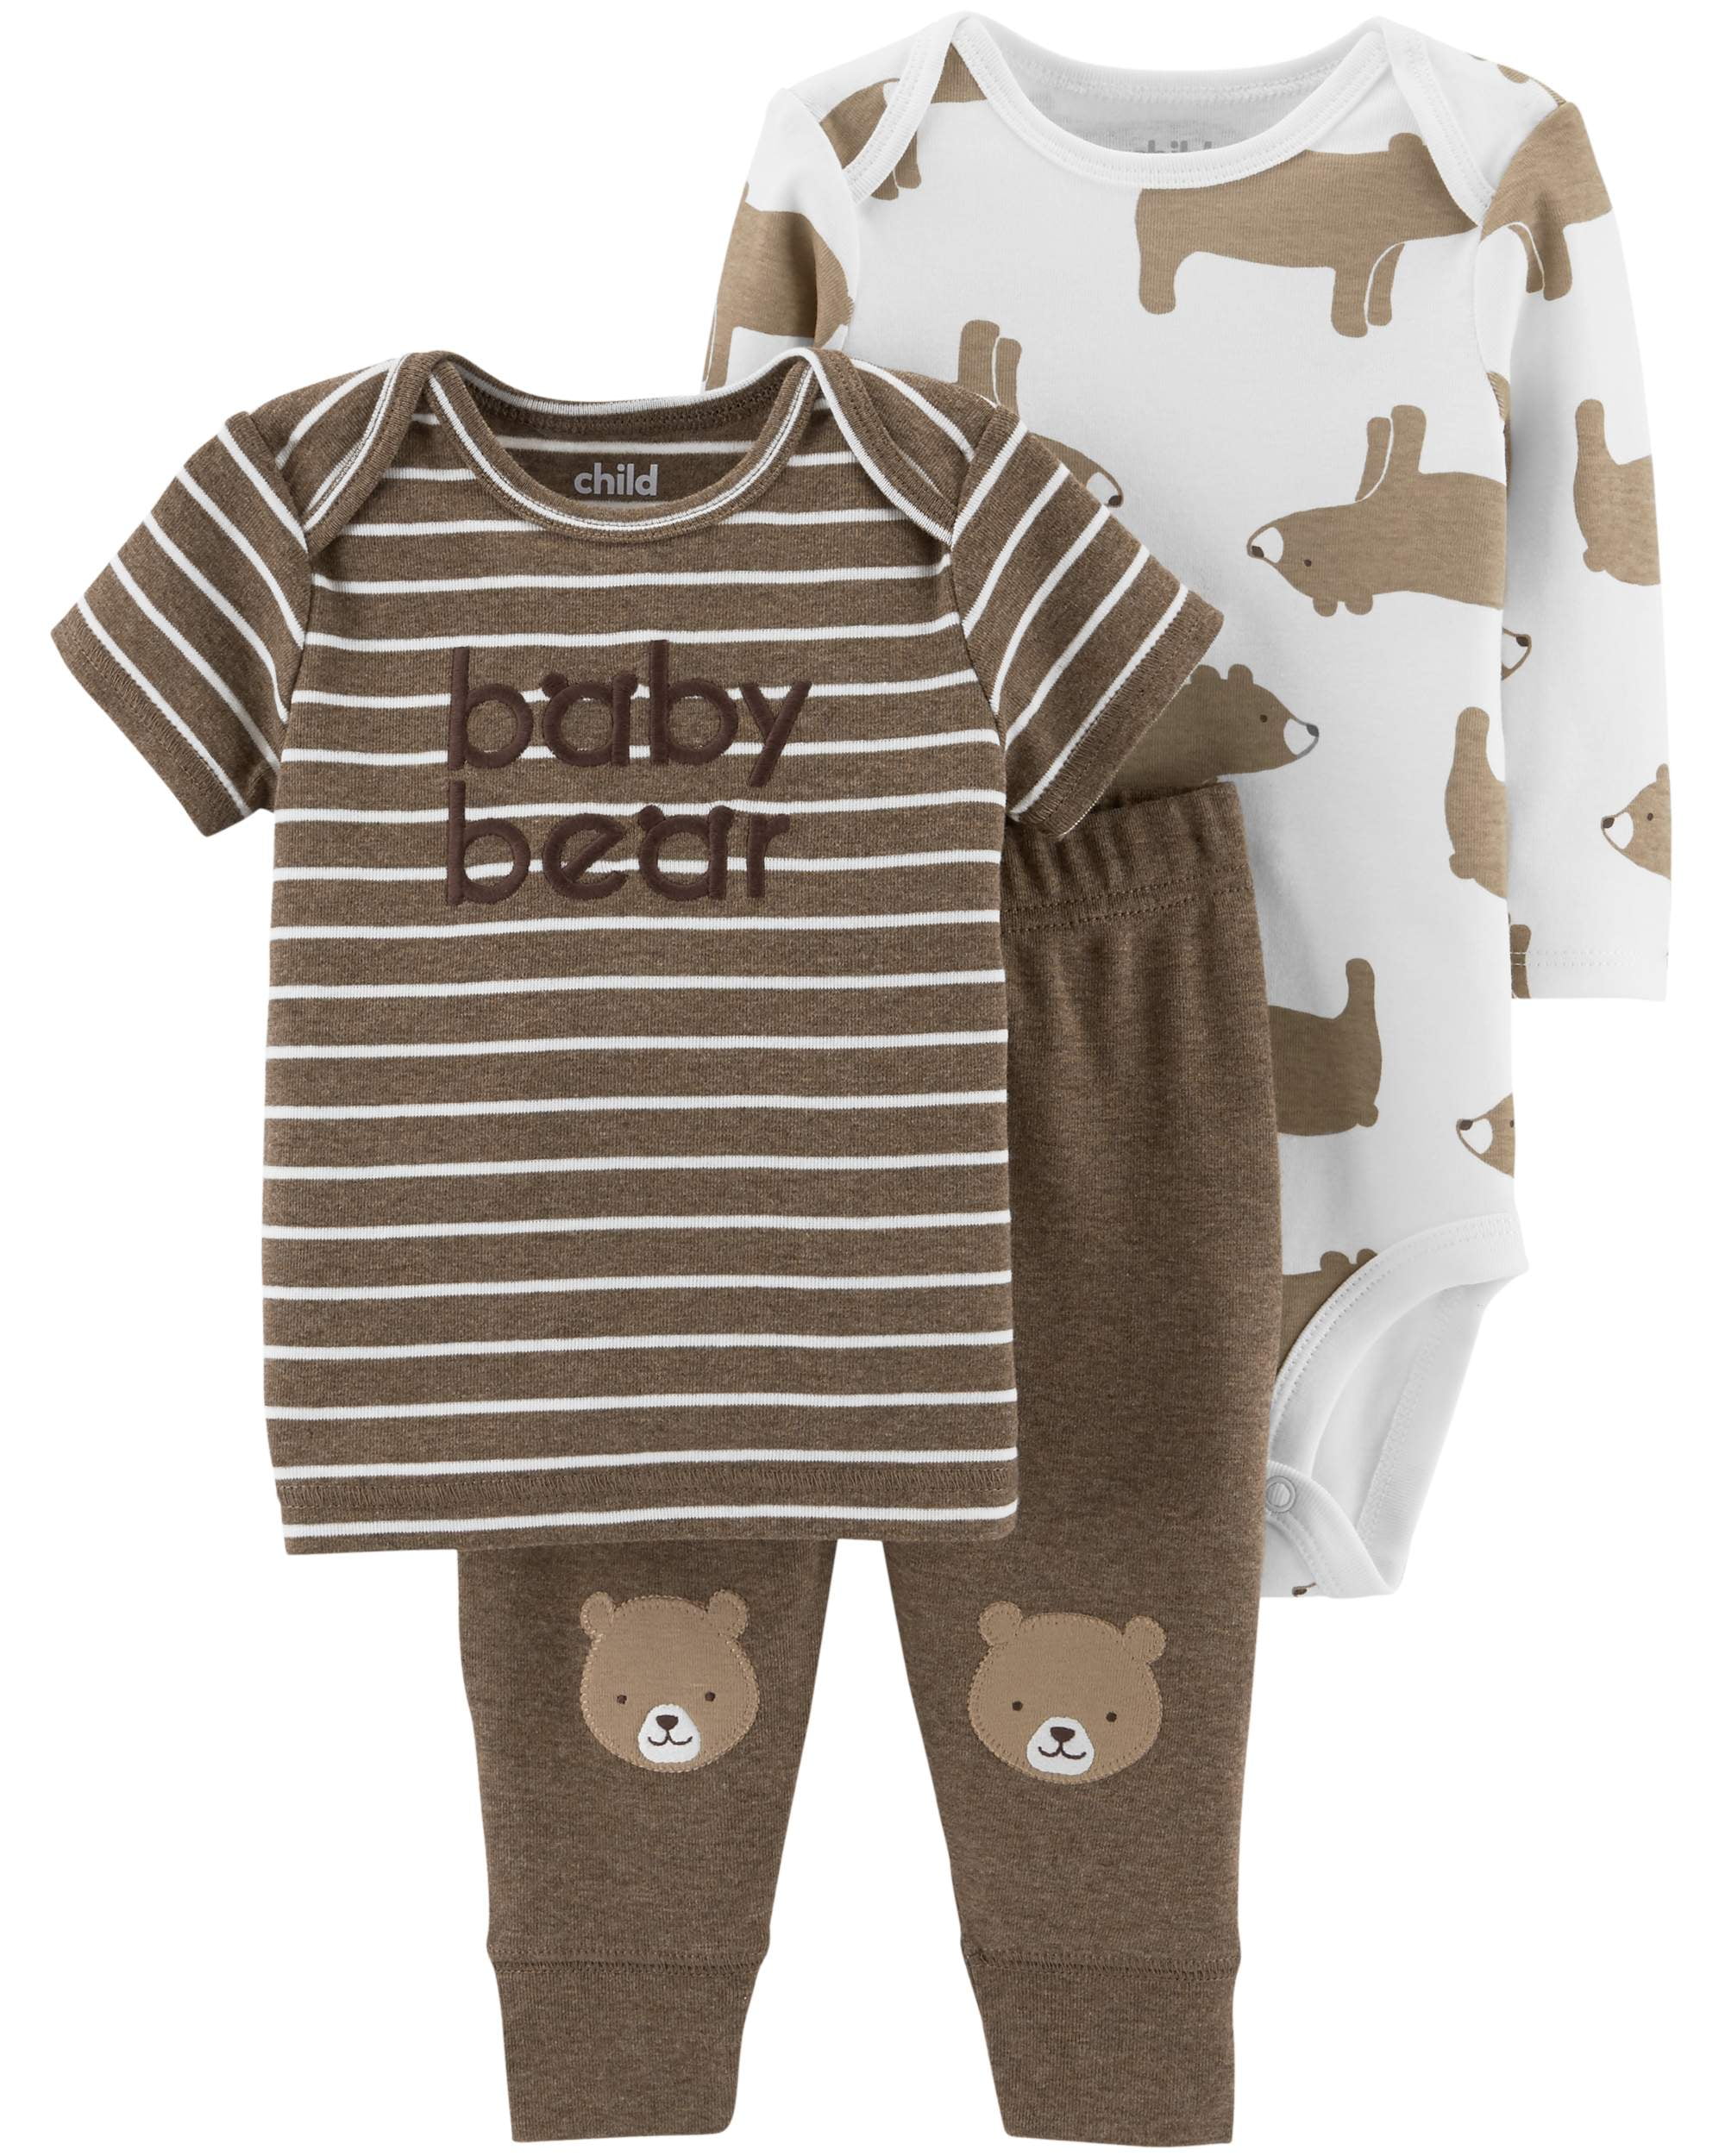 Dream-R Bear Baby Cub Newborn Babys Boys & Girls Short Sleeve Bodysuit Outfits For 0-24 Months Black